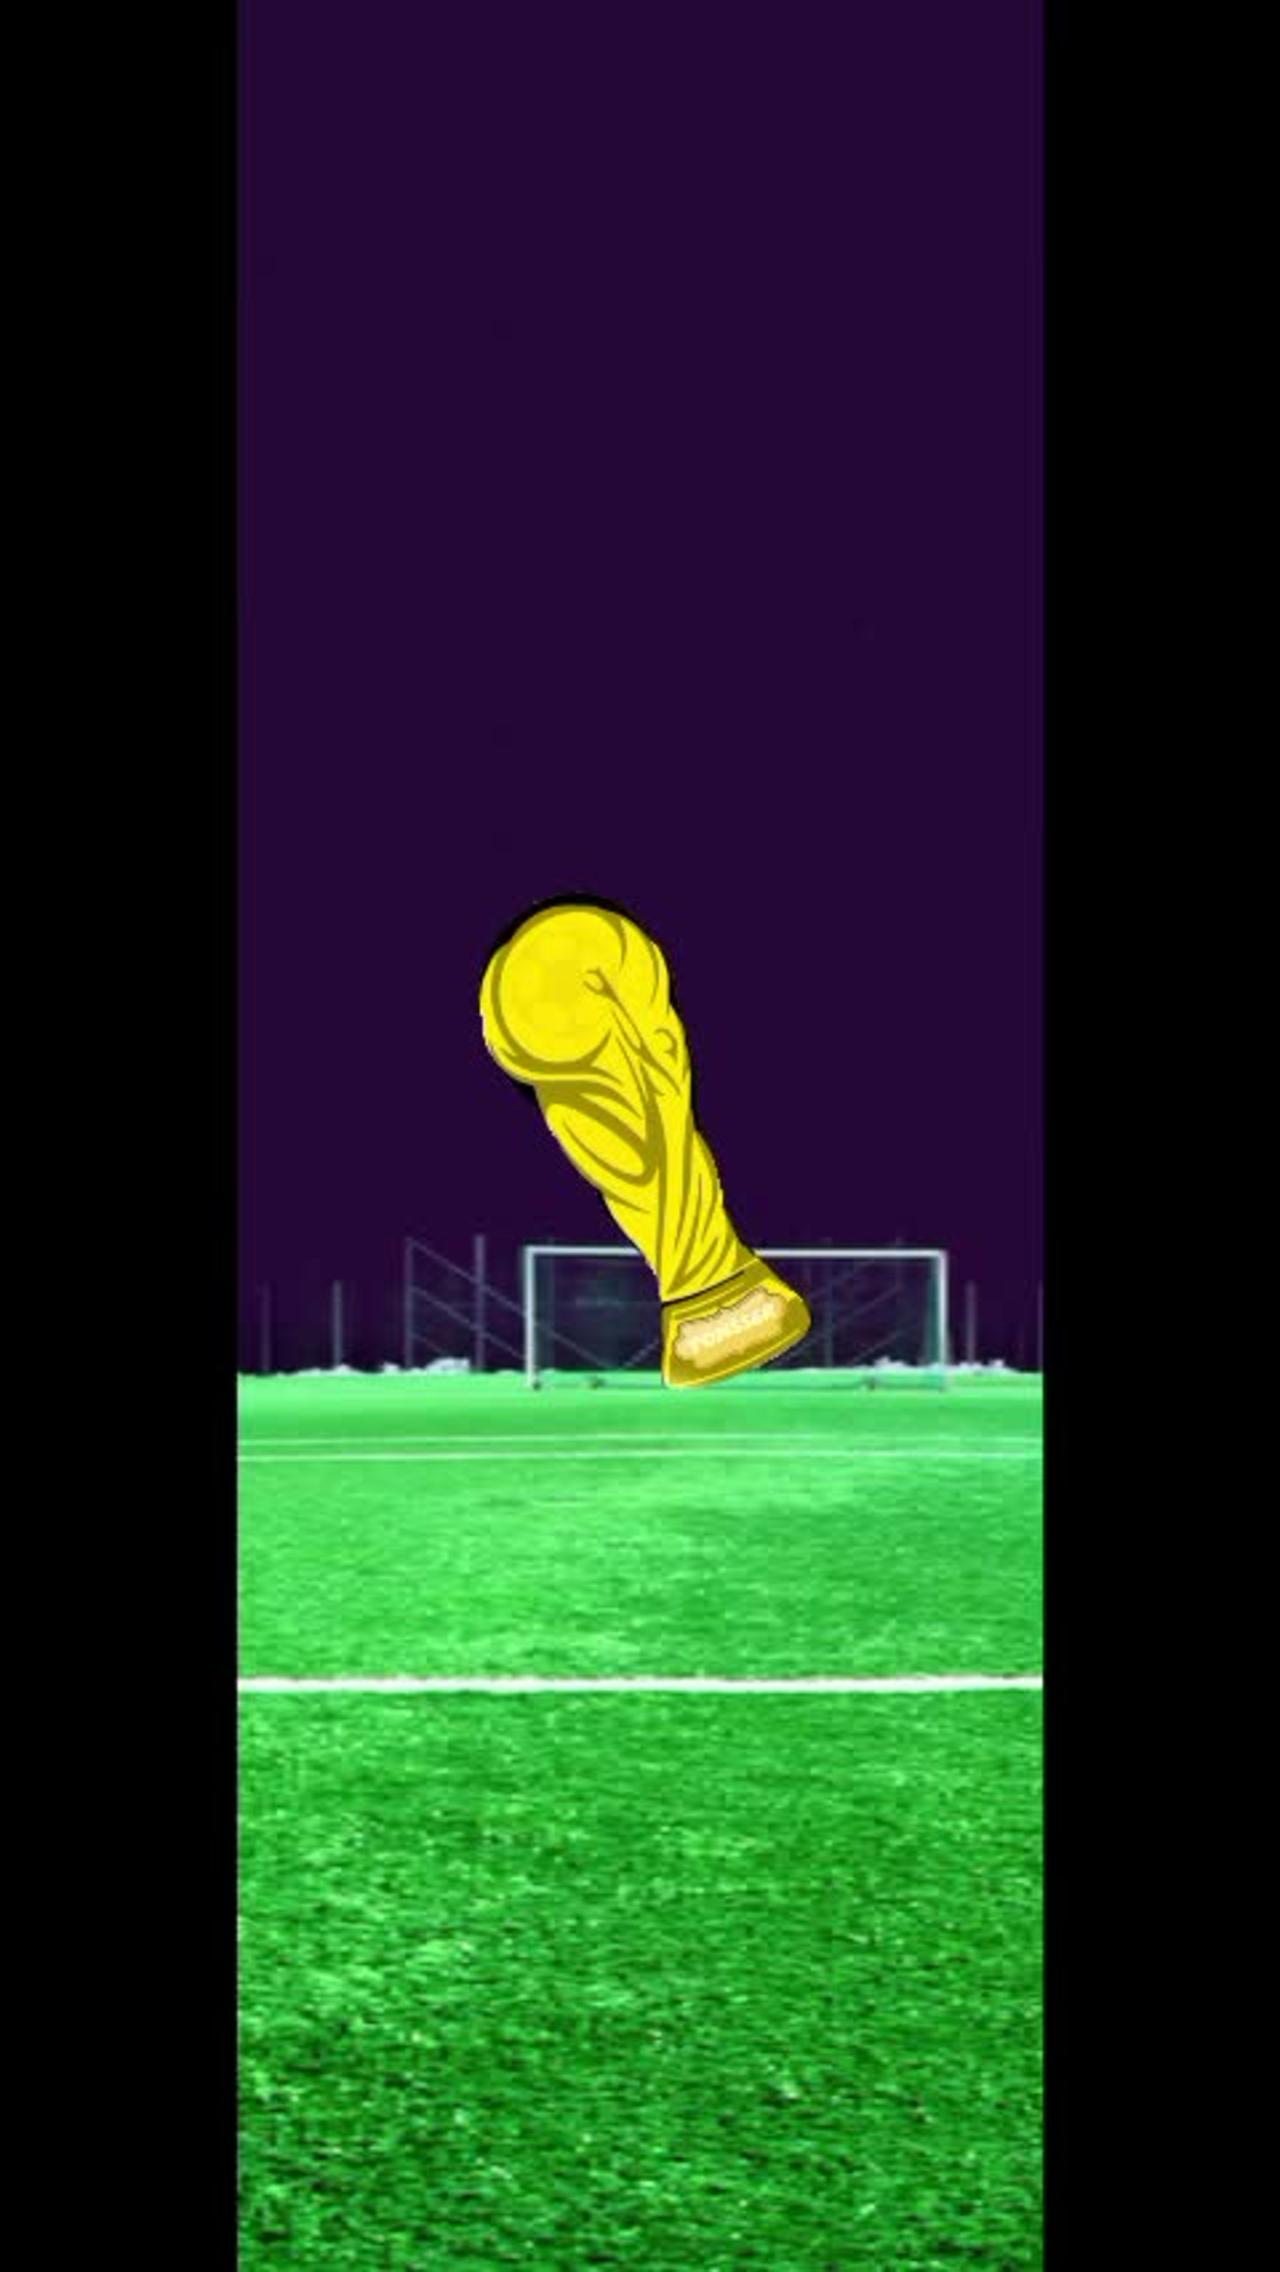 FIFA WORLD CUP QATAR WINNER PREDICTION #SHORTS